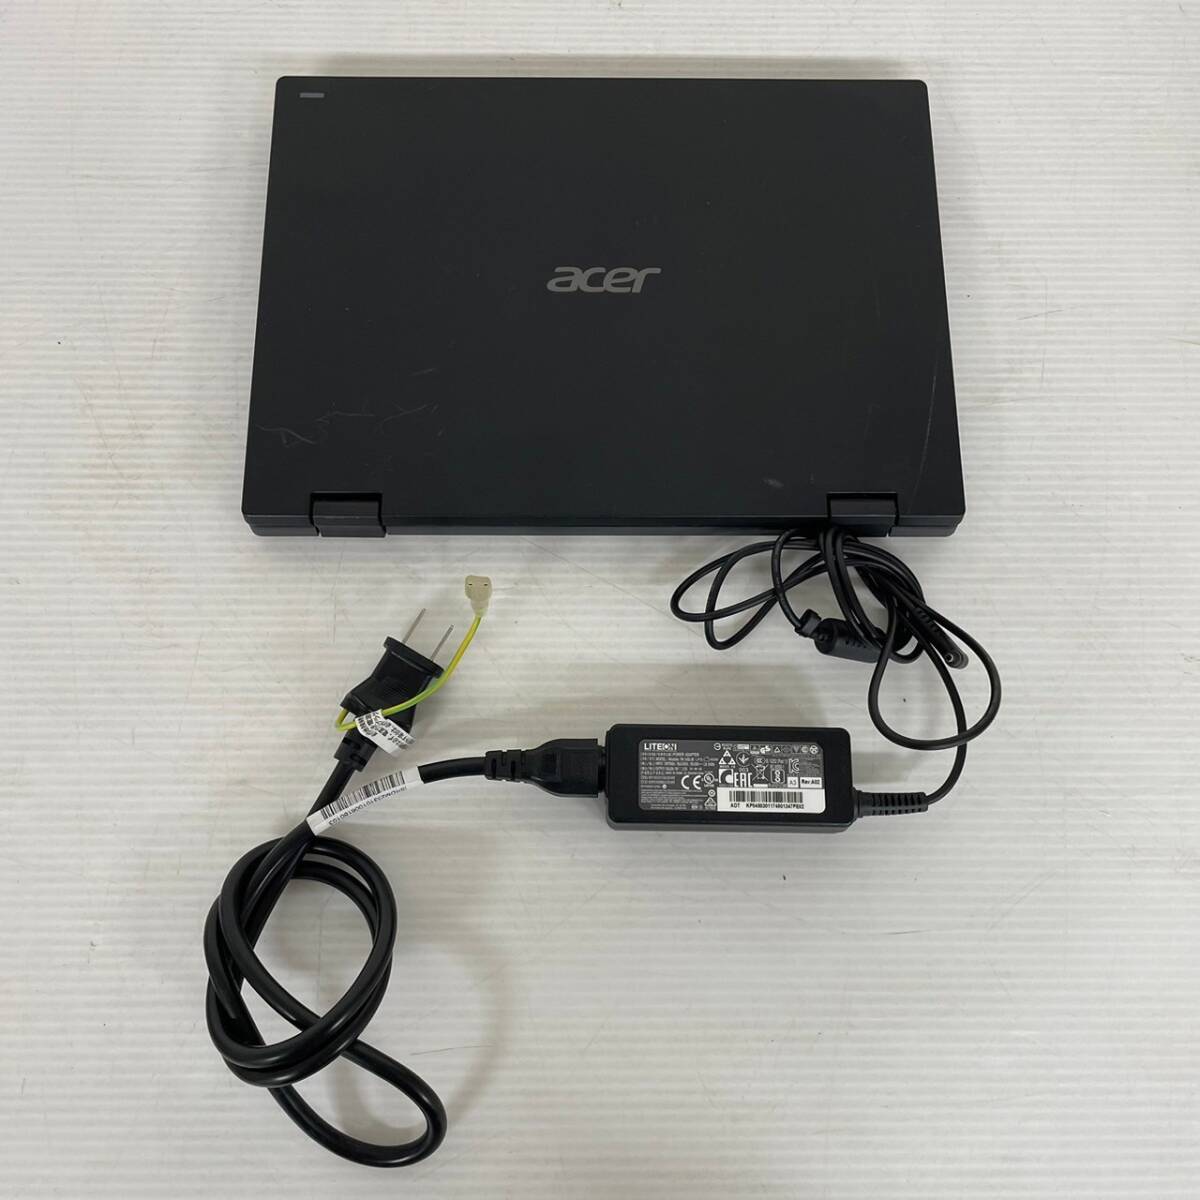 【acer】 エイサー 11.6型 ノートパソコン Travel Mate Spin B118 N16Q15 Celeron N3350 1.1GHz 4GB SSD M.2 128GB タッチパネルの画像1